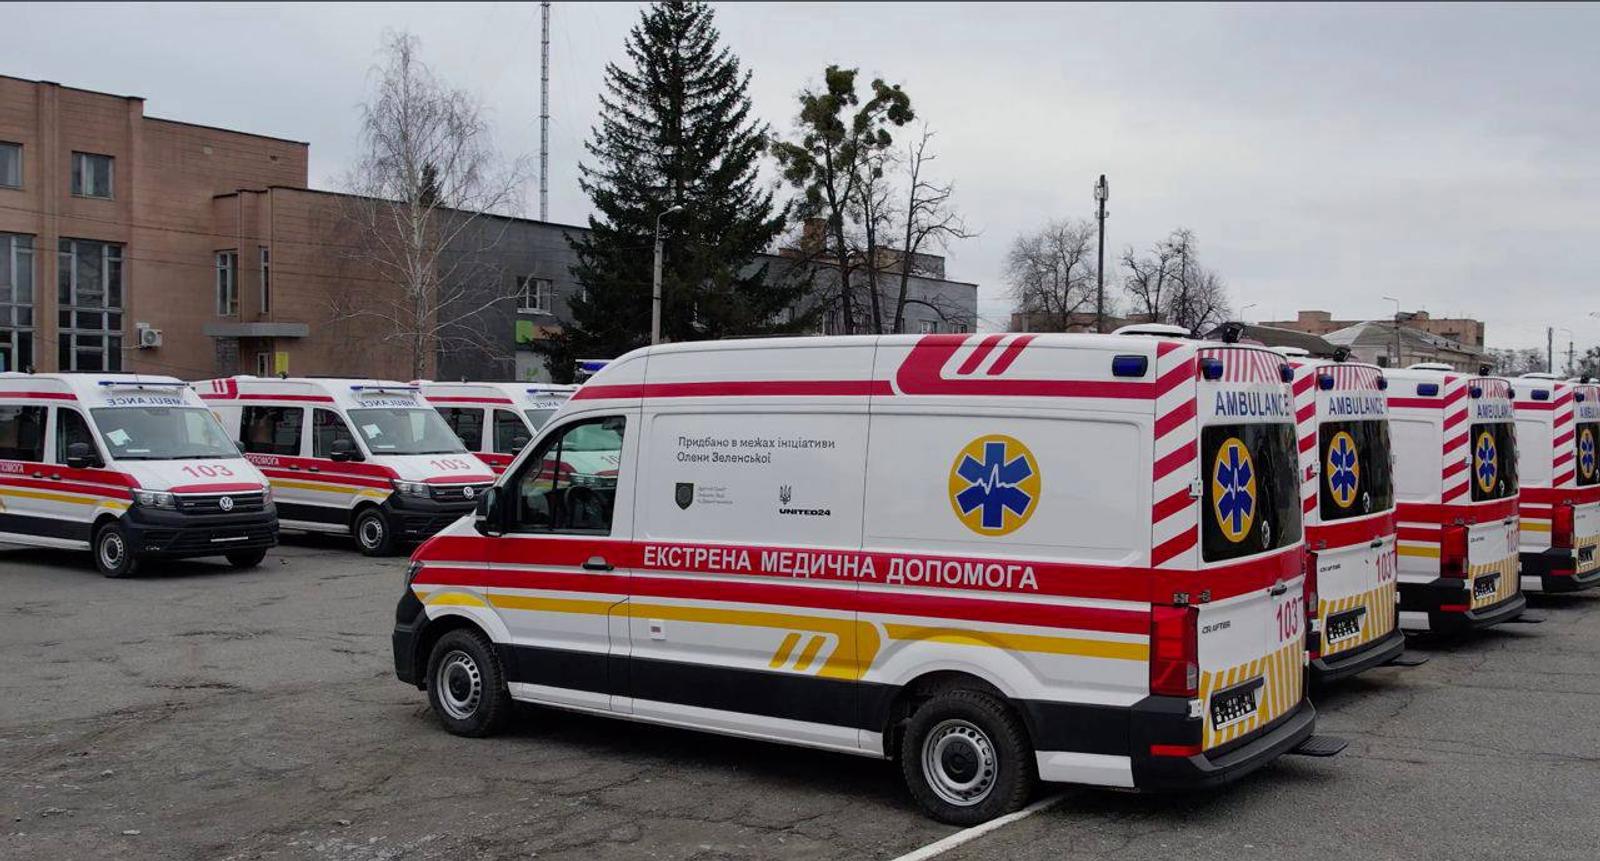 9 all-terrain ambulances are now active in 5 regions of Ukraine: Zaporizhia, Mykolaiv, Chernihiv, Sumy, and Kharkiv regions